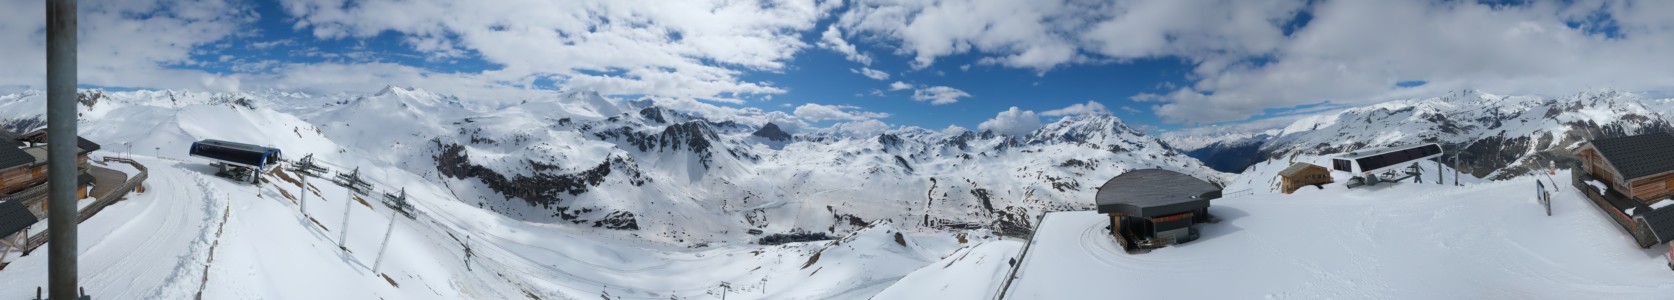 Tignes webcam - Toviere ski station